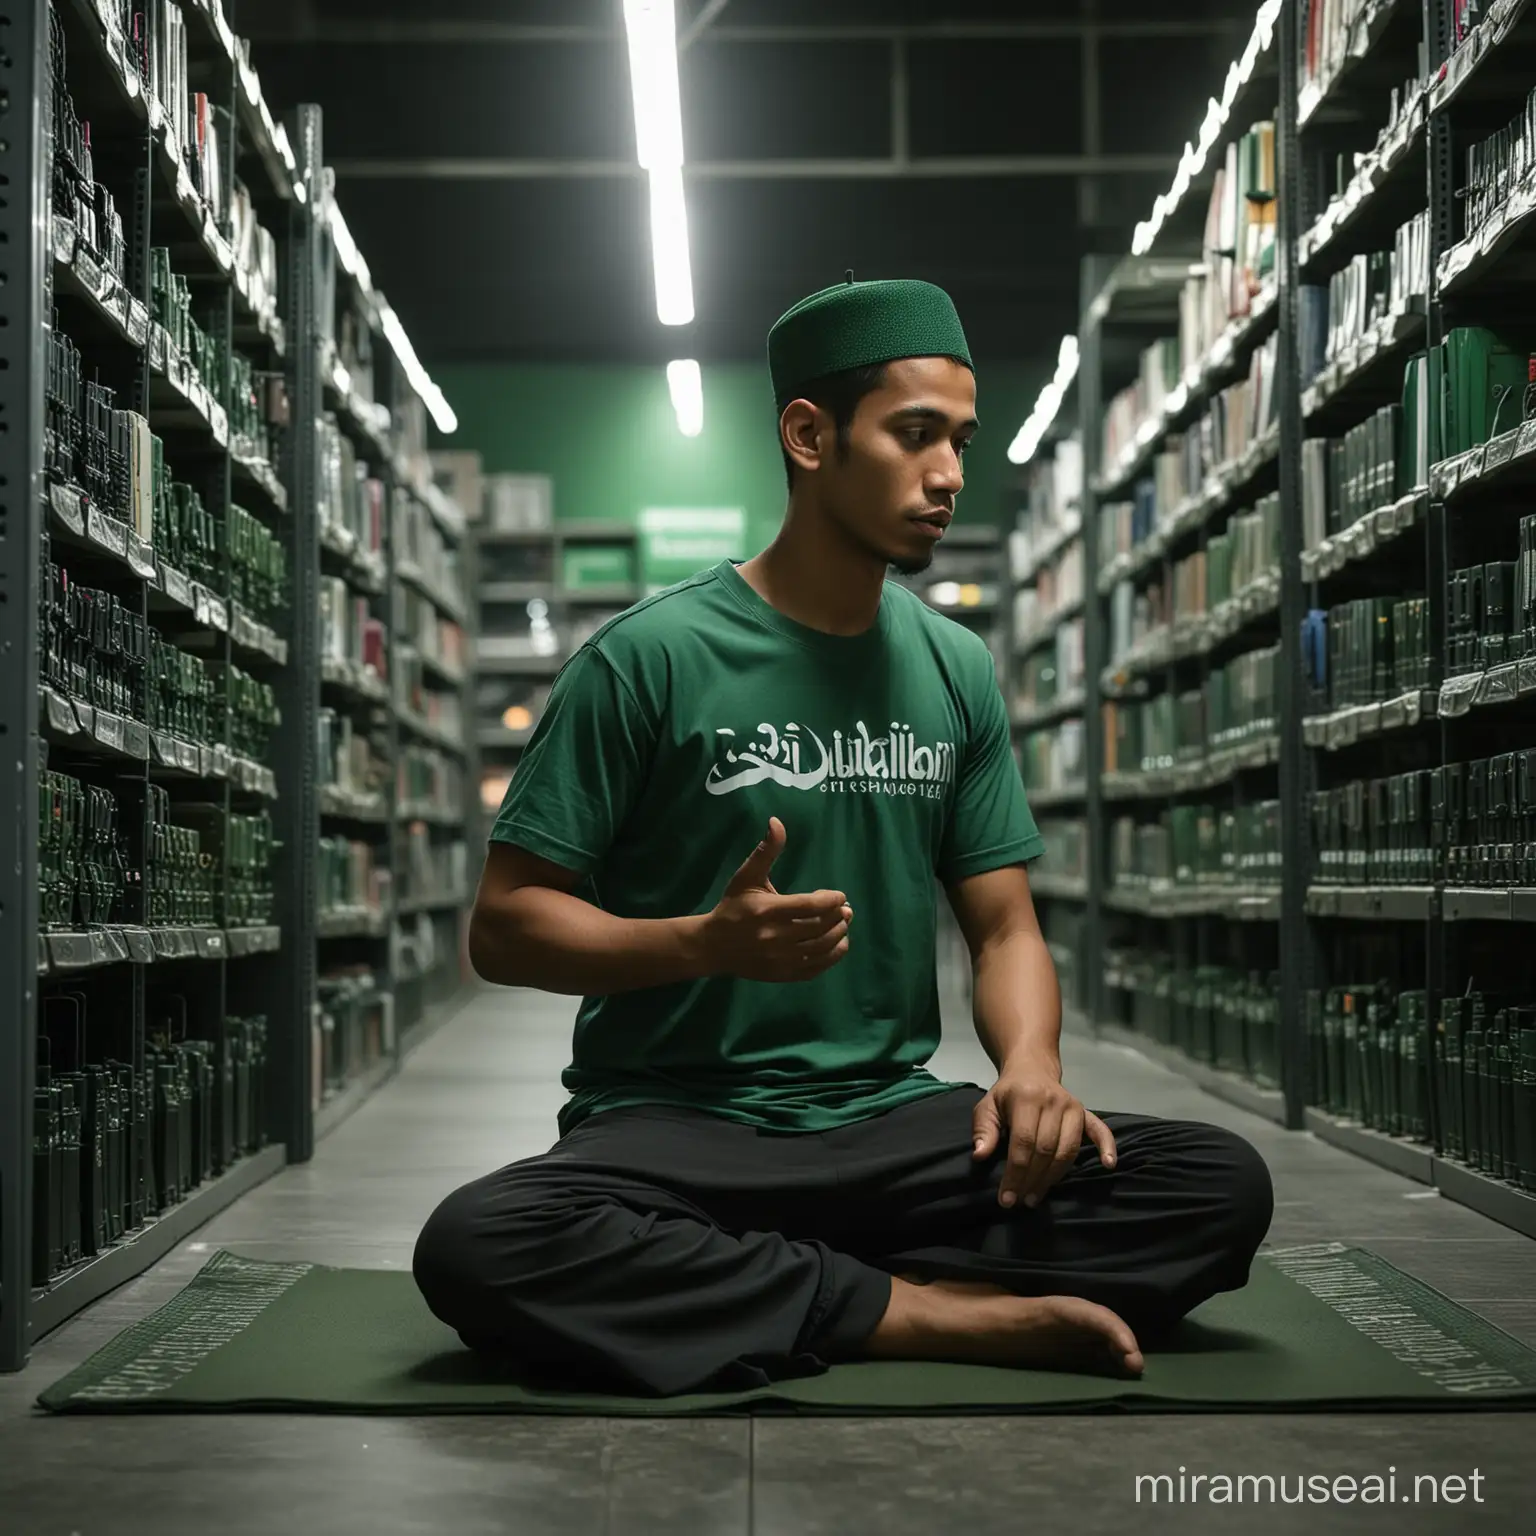 Muslim Malay Worker Praying in Computer Shop with Dark Green TShirt